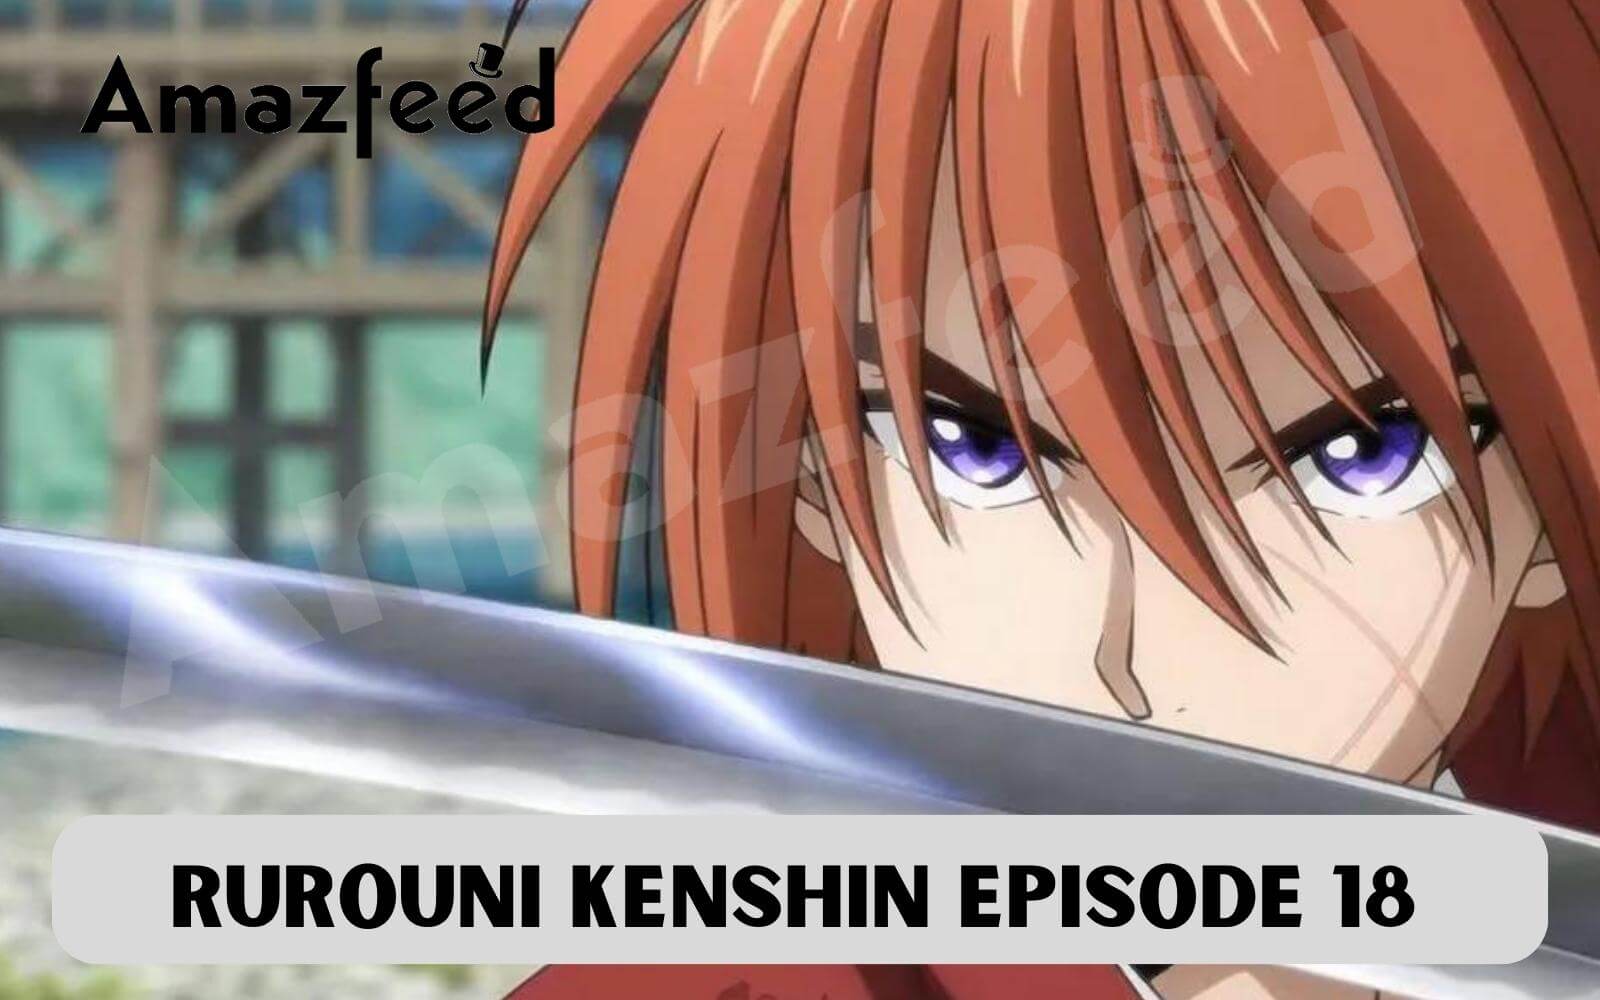 Rurouni Kenshin episode 19: Release date and time, countdown